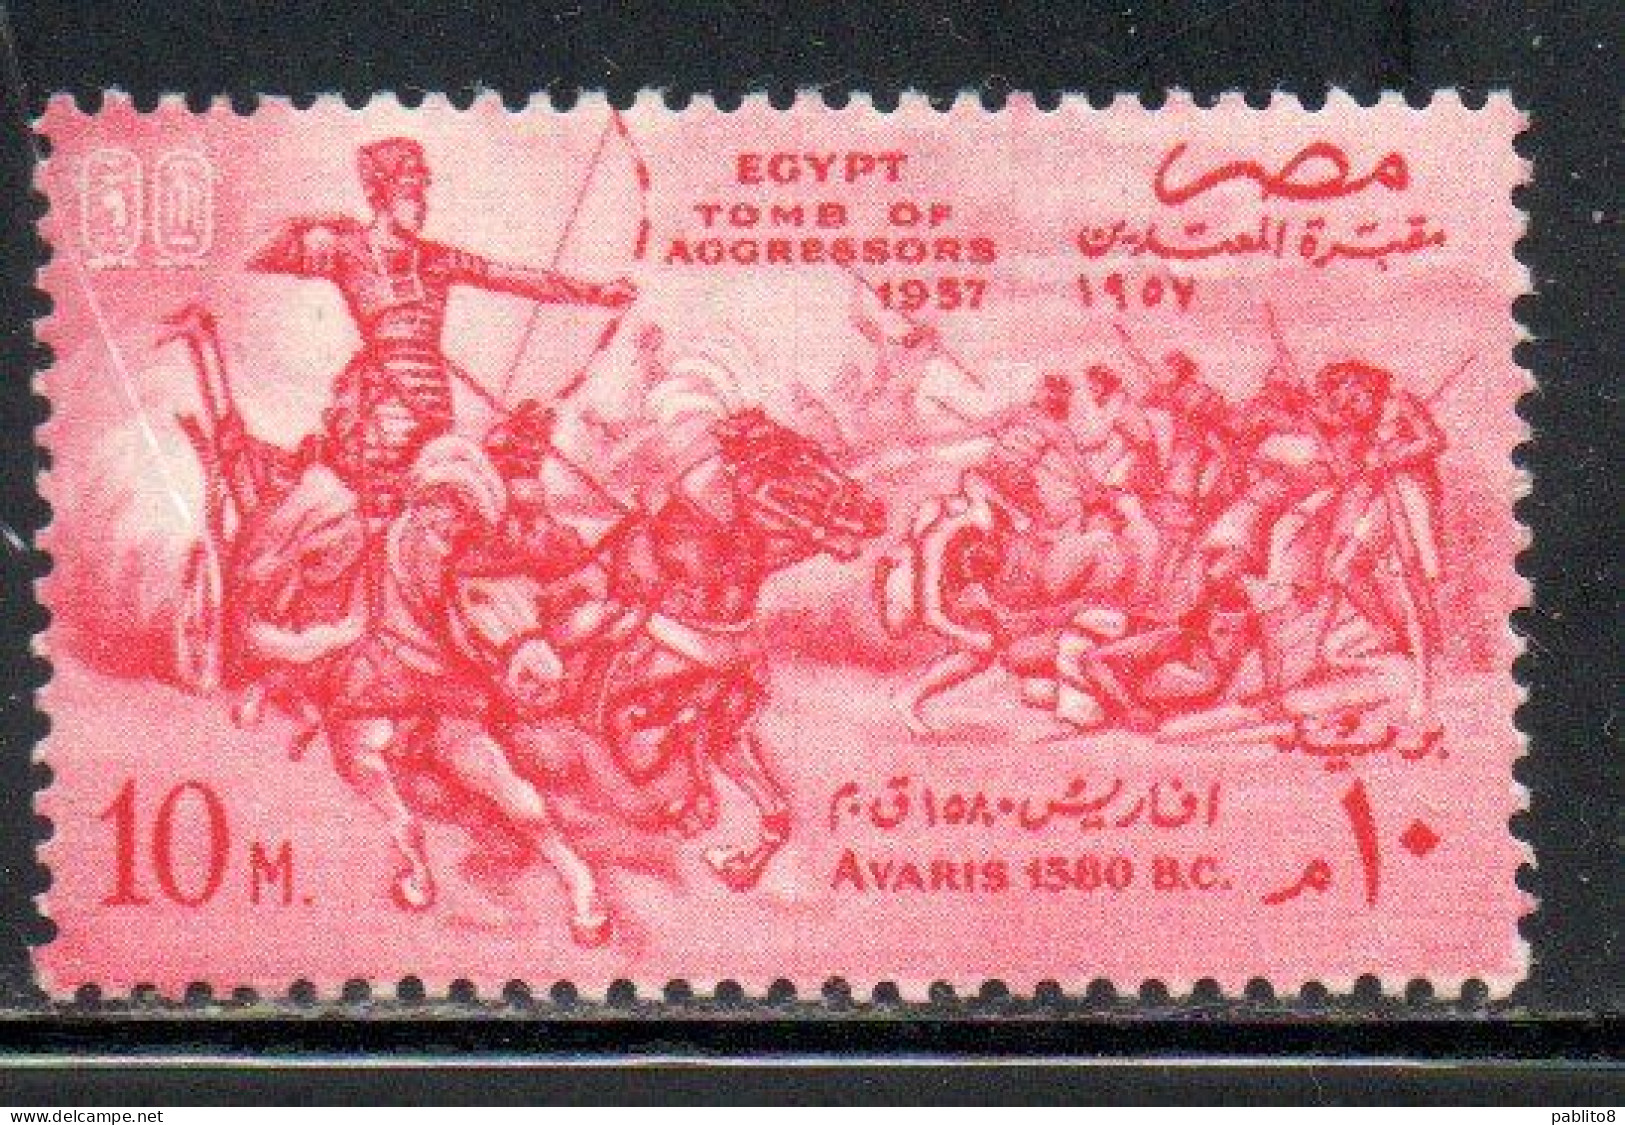 UAR EGYPT EGITTO 1957 AMASIS I IN BATTLE OF AVARIS SULTAN SALADIN 10m MH - Unused Stamps